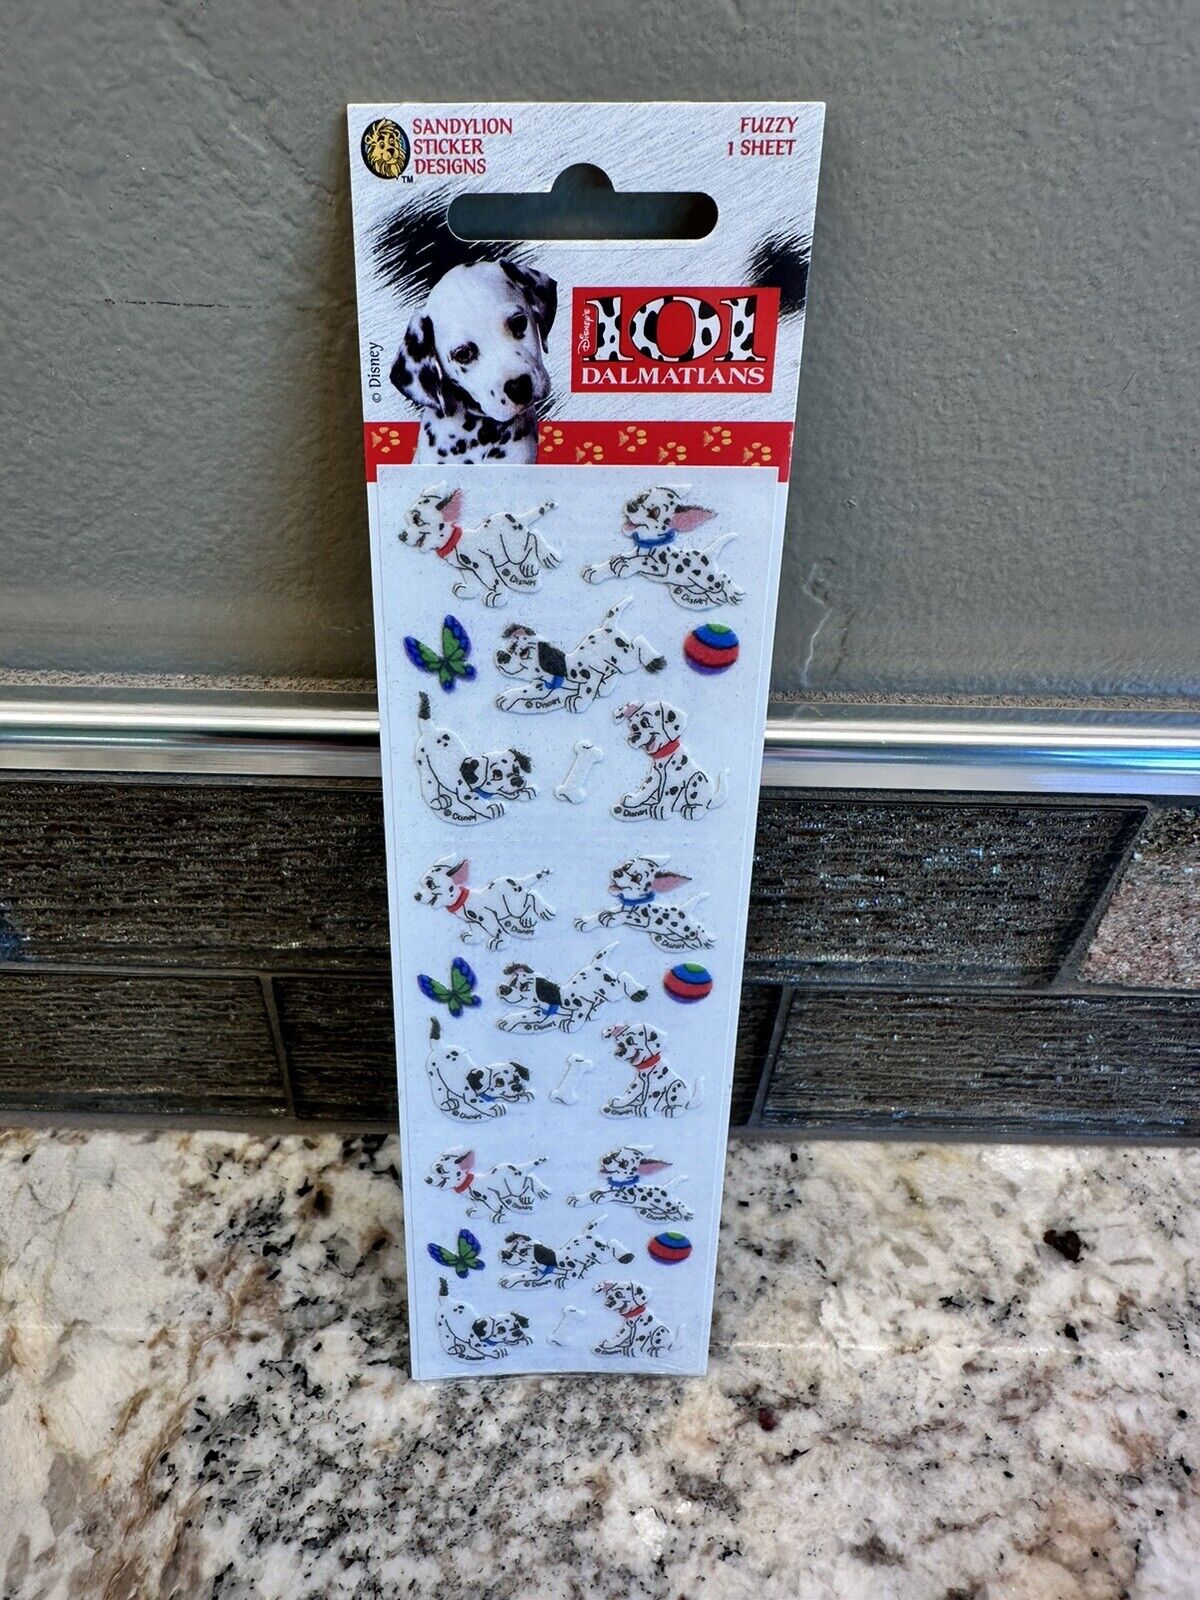 Vintage Sandylion Fuzzy 101 Dalmatian Disney Puppy Dogs Stickers sealed